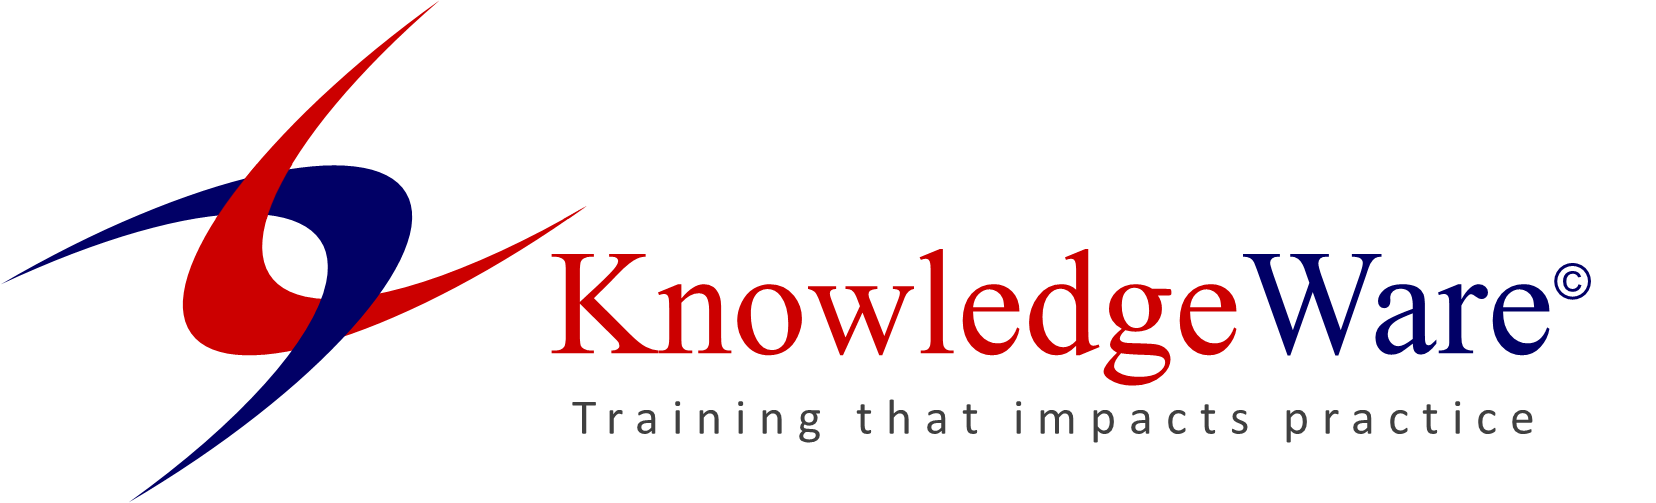 KnowledgeWare